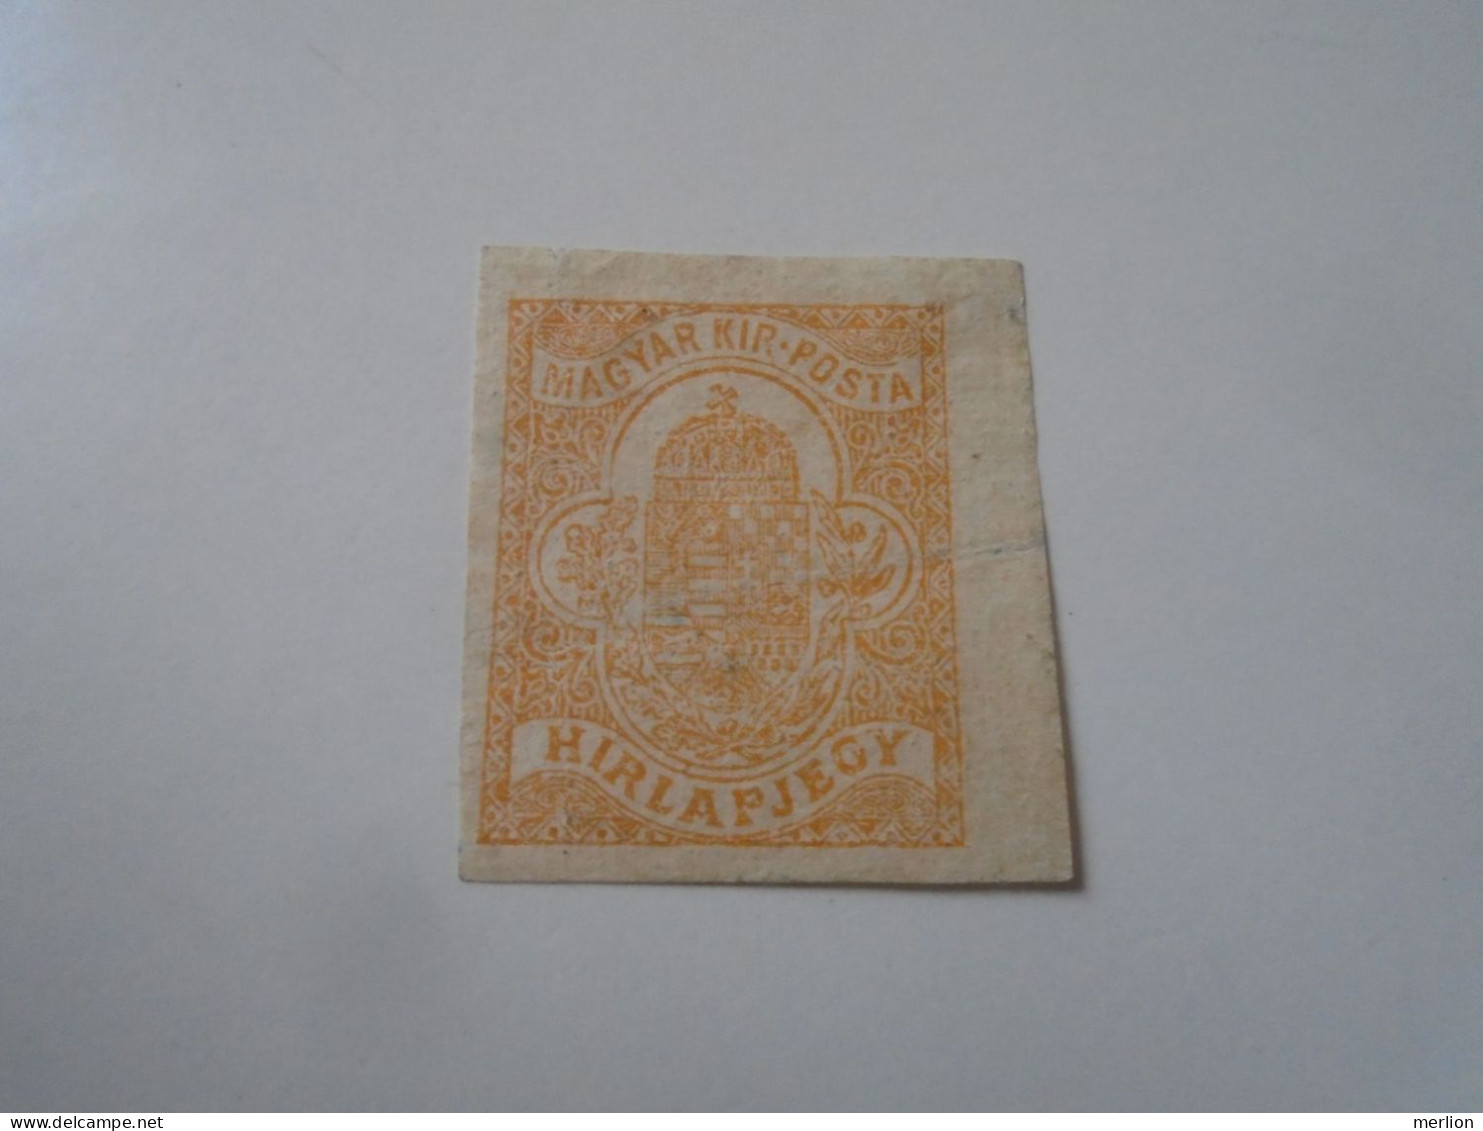 D195525   Hungary - Newspaper   Tax Stamp  Ca 1900  - Hírlapjegy - Zeitungsmarken